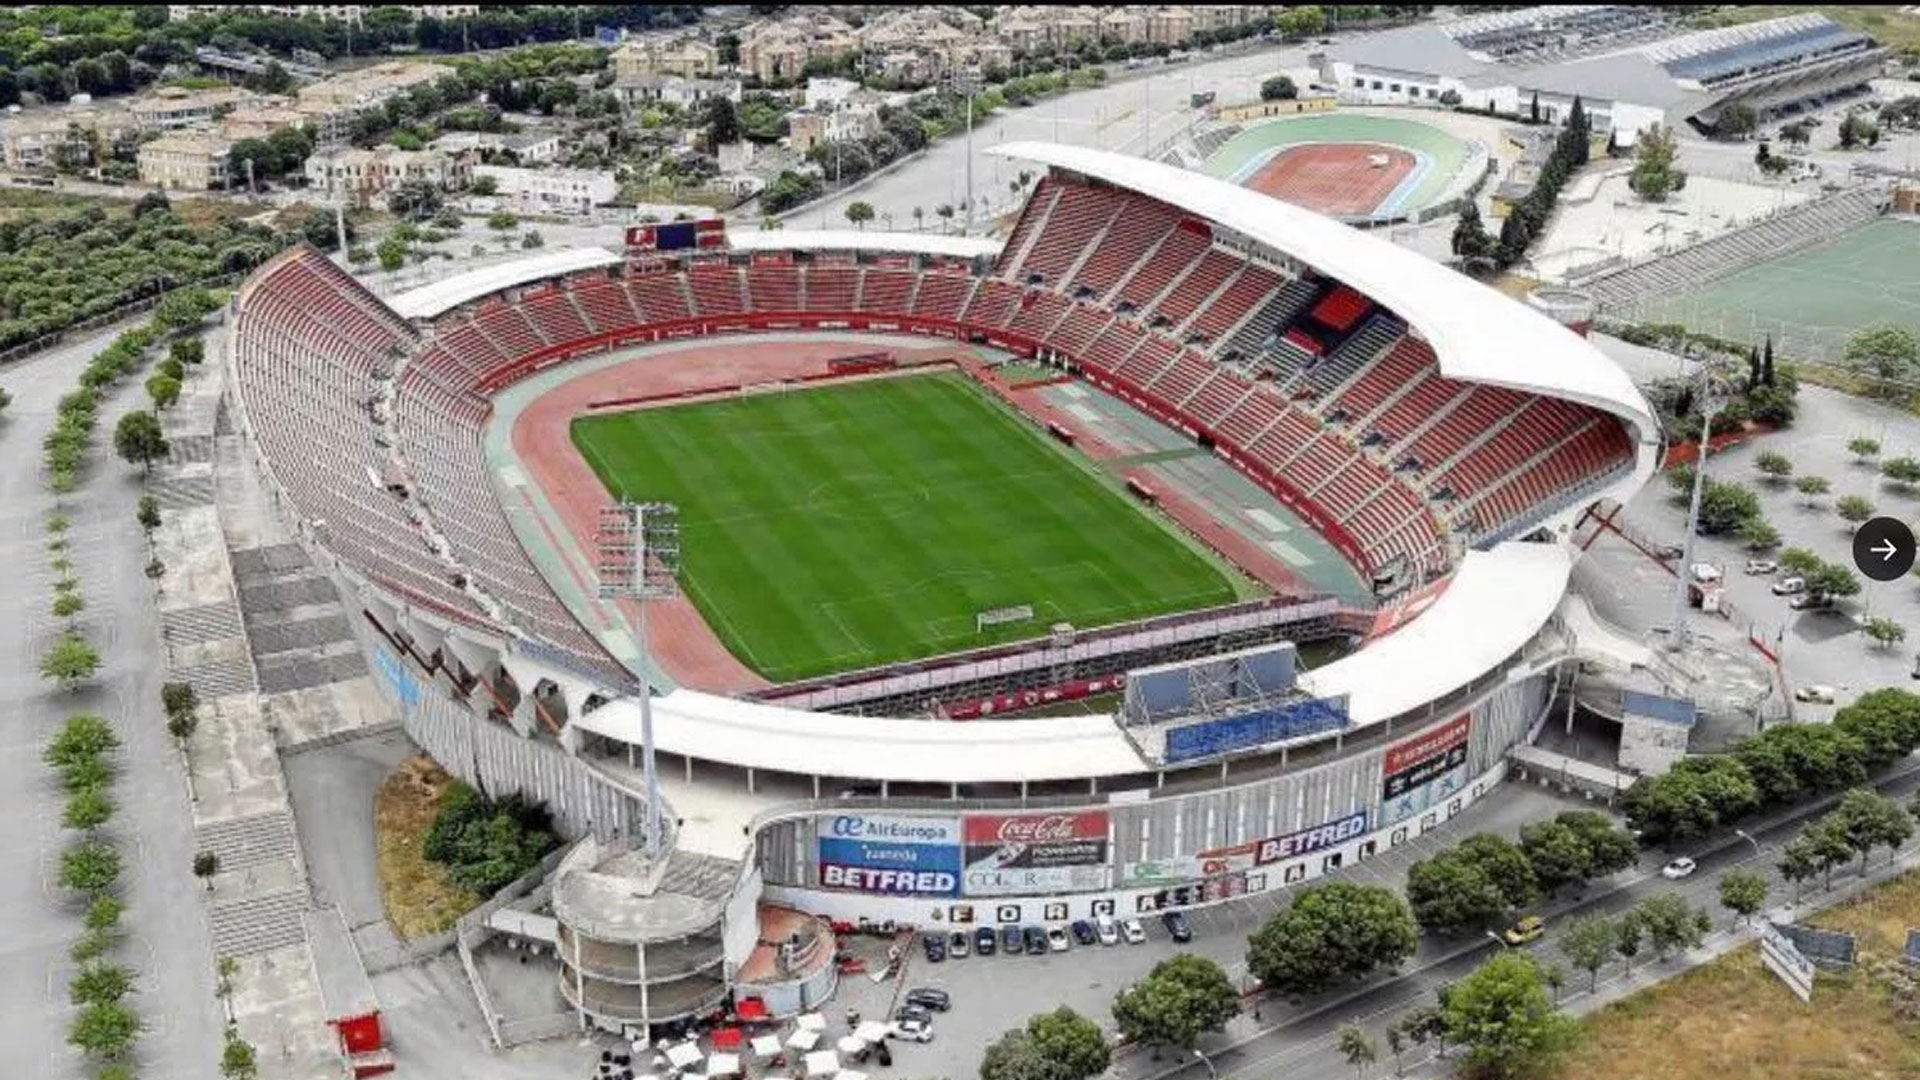 La Liga stadium undergoes stunning transformation with running track demolished and capacity increased